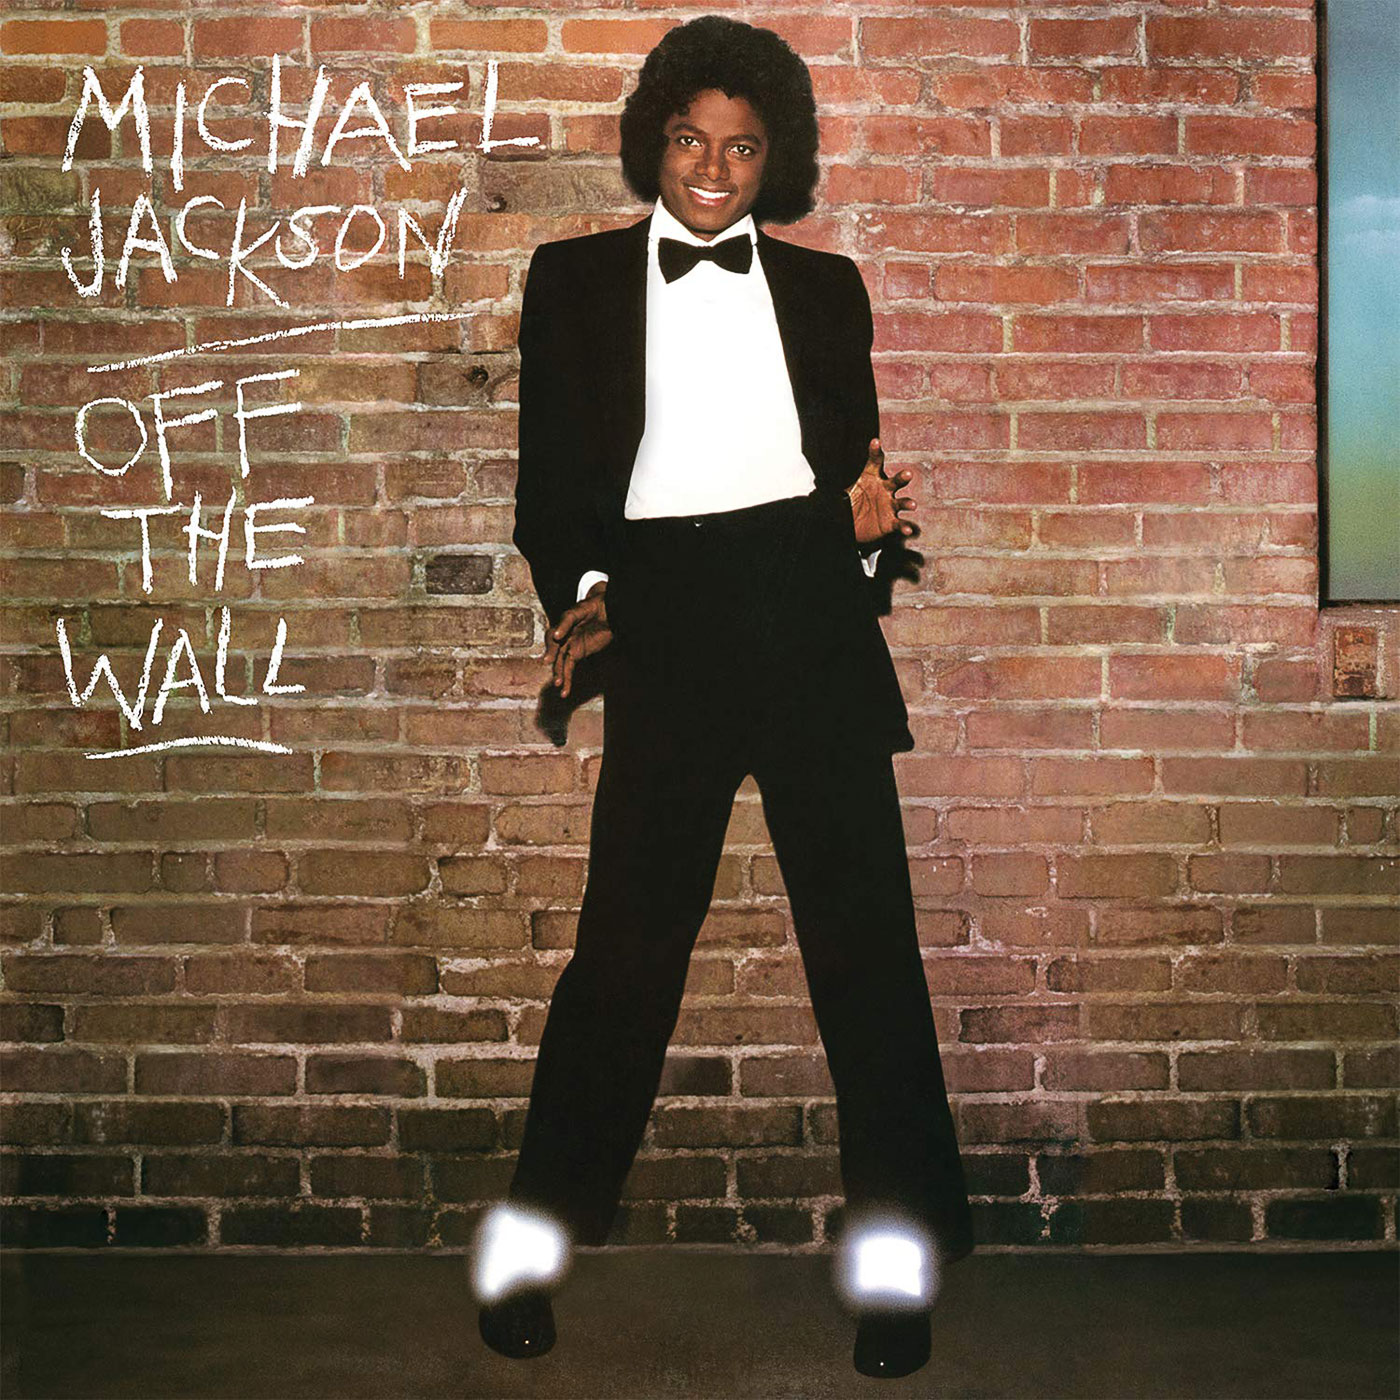 450 Michael Jackson – Off the Wall